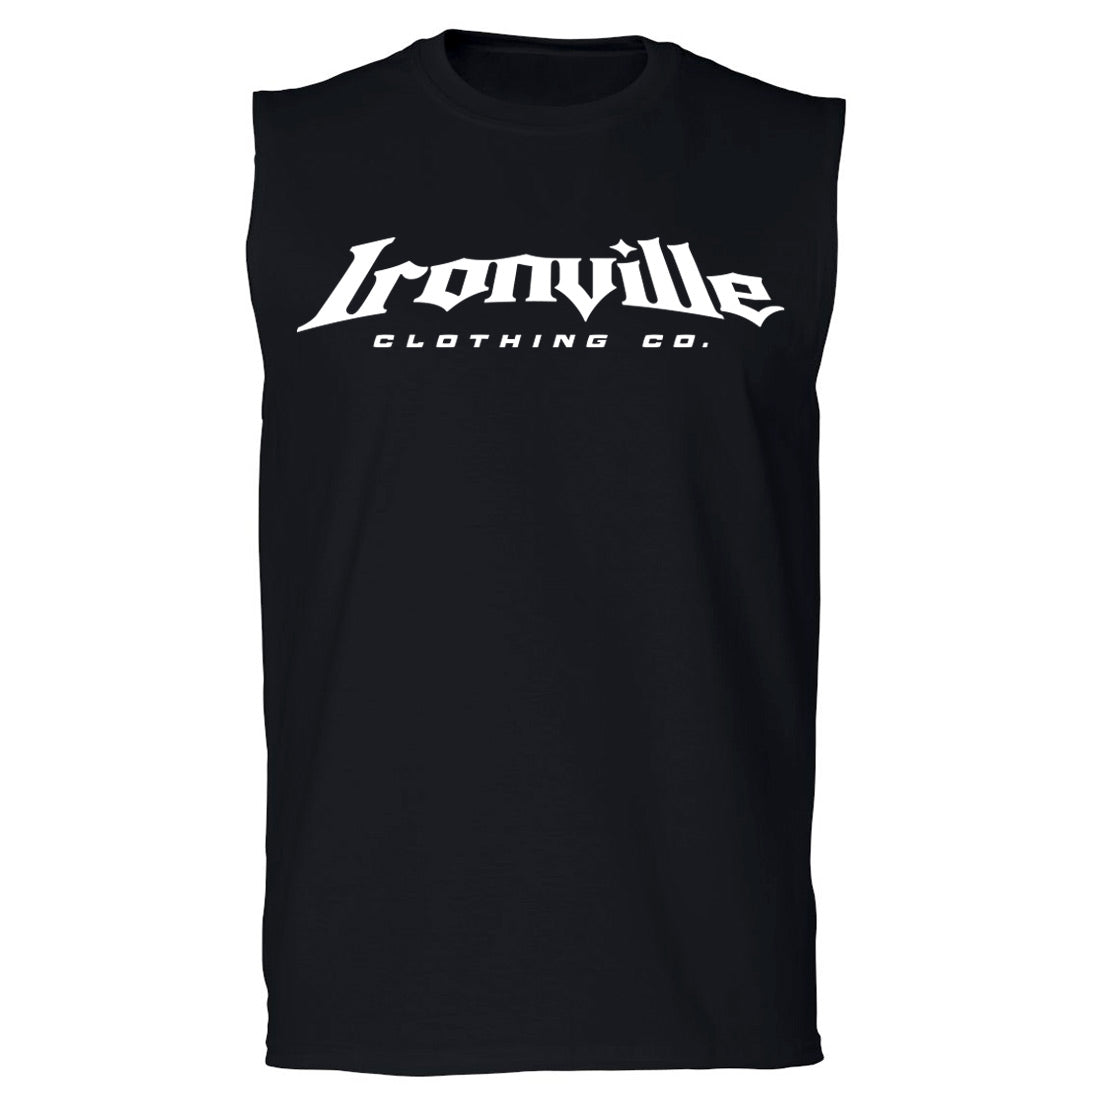 Ironville OLD GLORY Sleeveless Muscle T-shirt